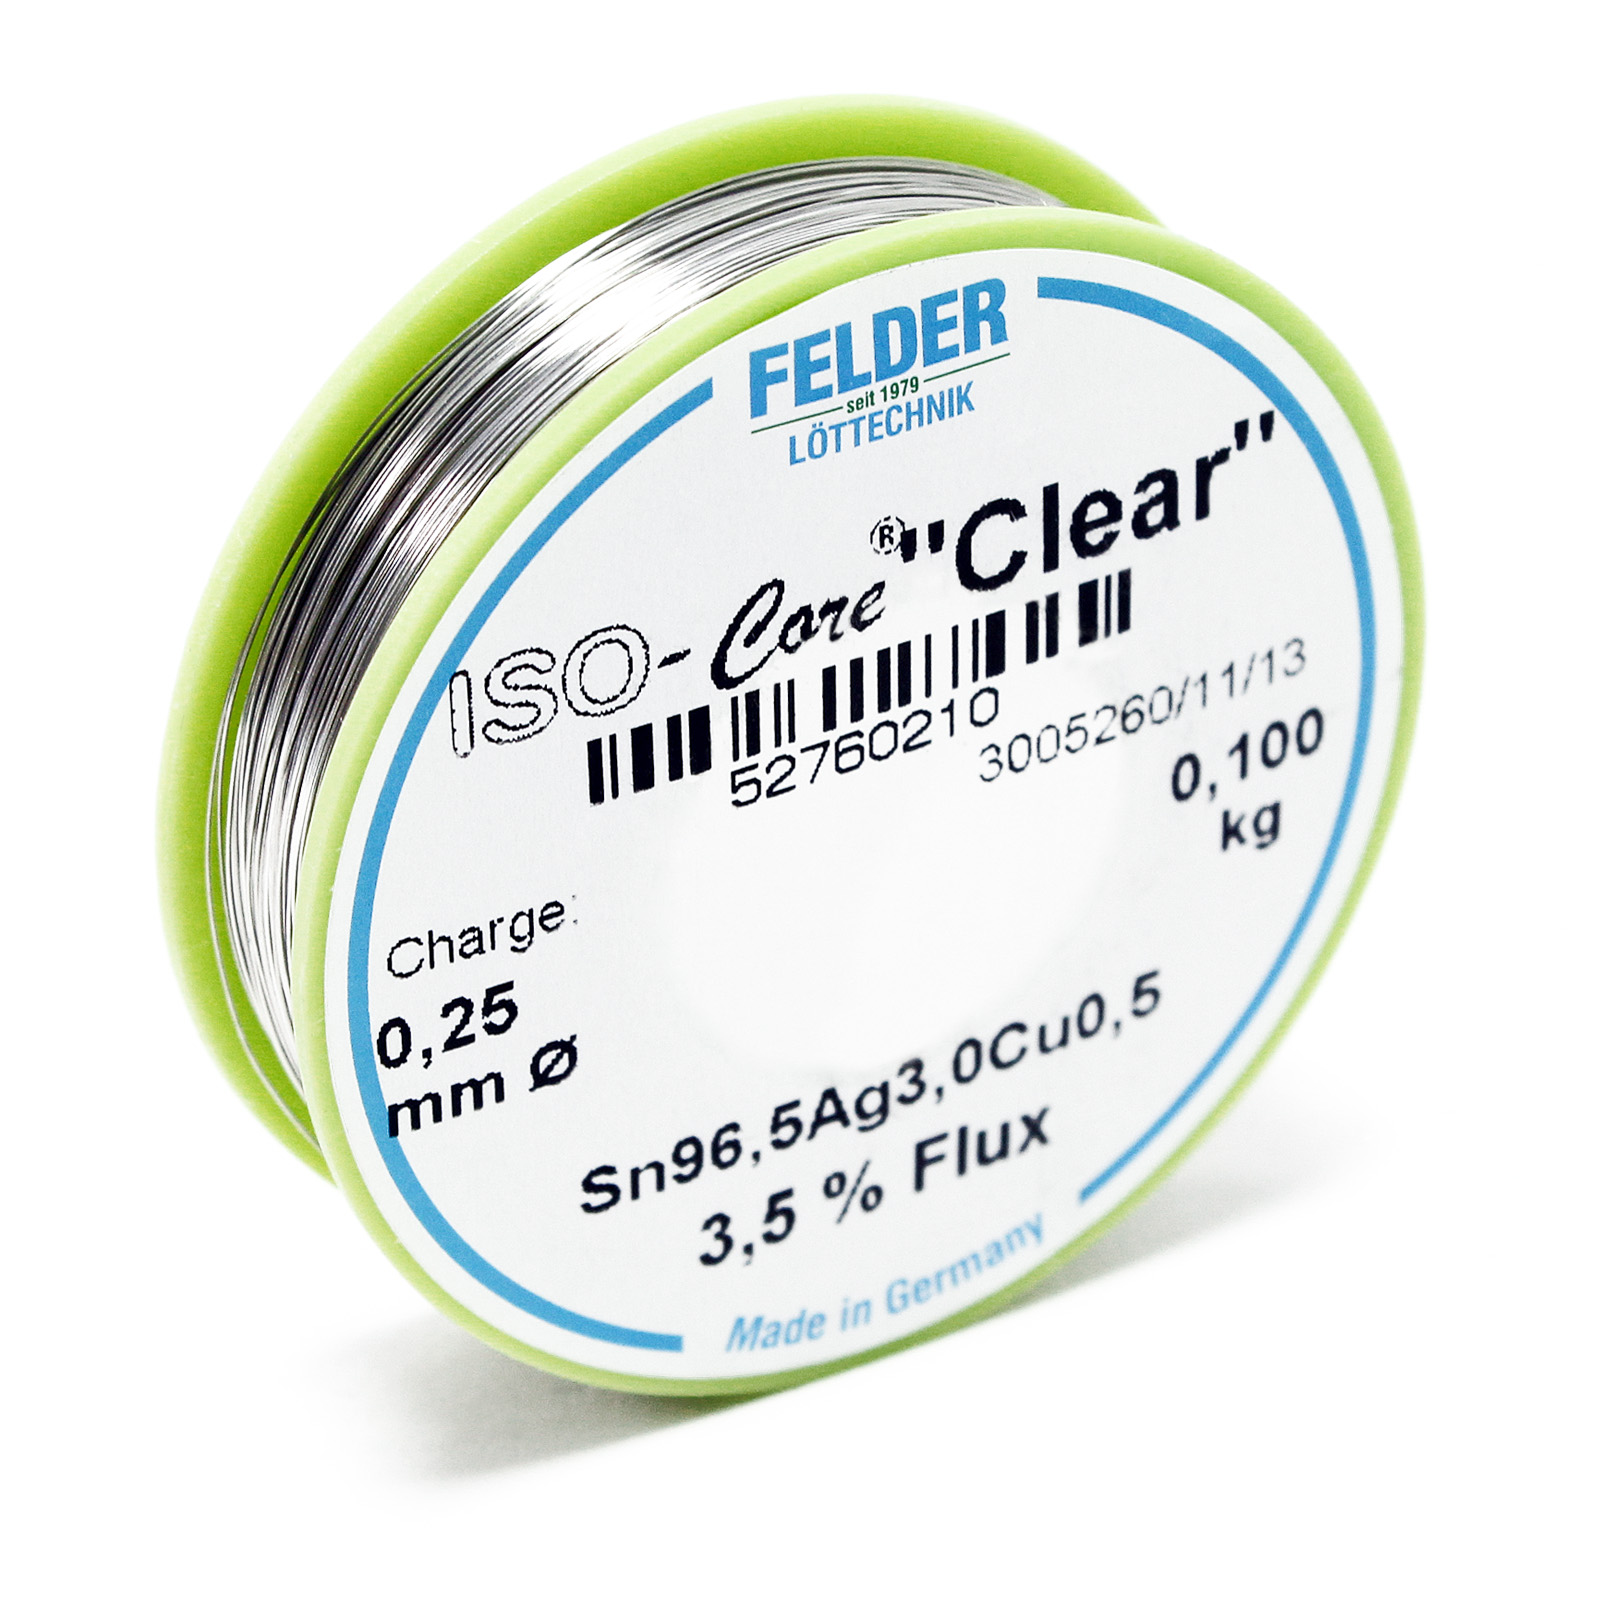 Felder Solder Wire Iso-Core "Clear" SAC305 Sn96.5Ag3Cu0.5 0.25mm 0.1kg